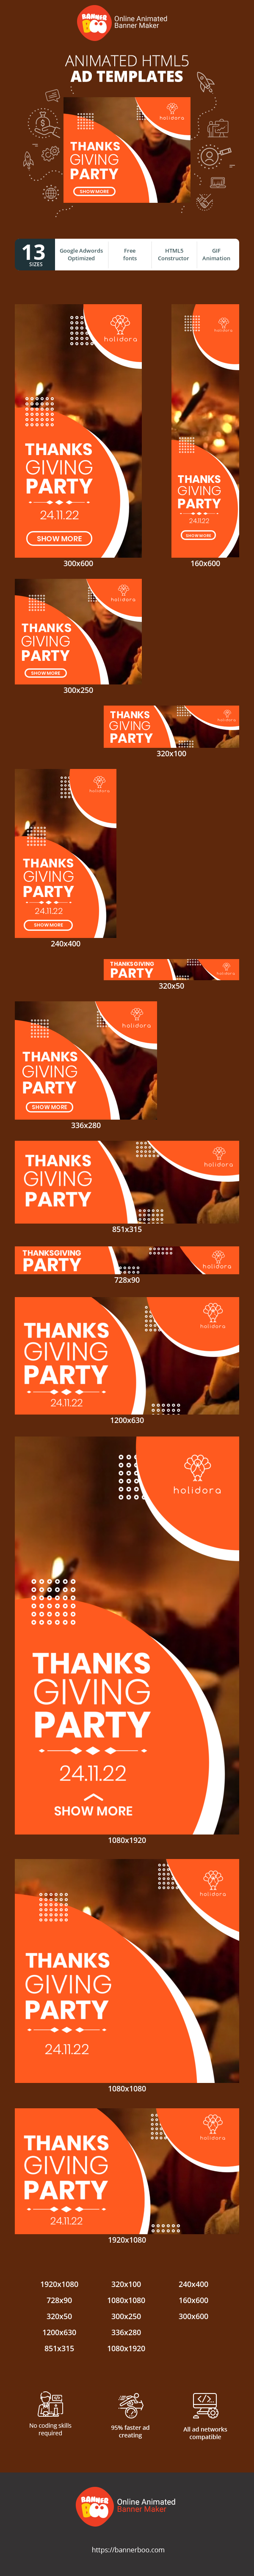 Szablon reklamy banerowej — Thanksgiving Party 24.11.22 — Holiday